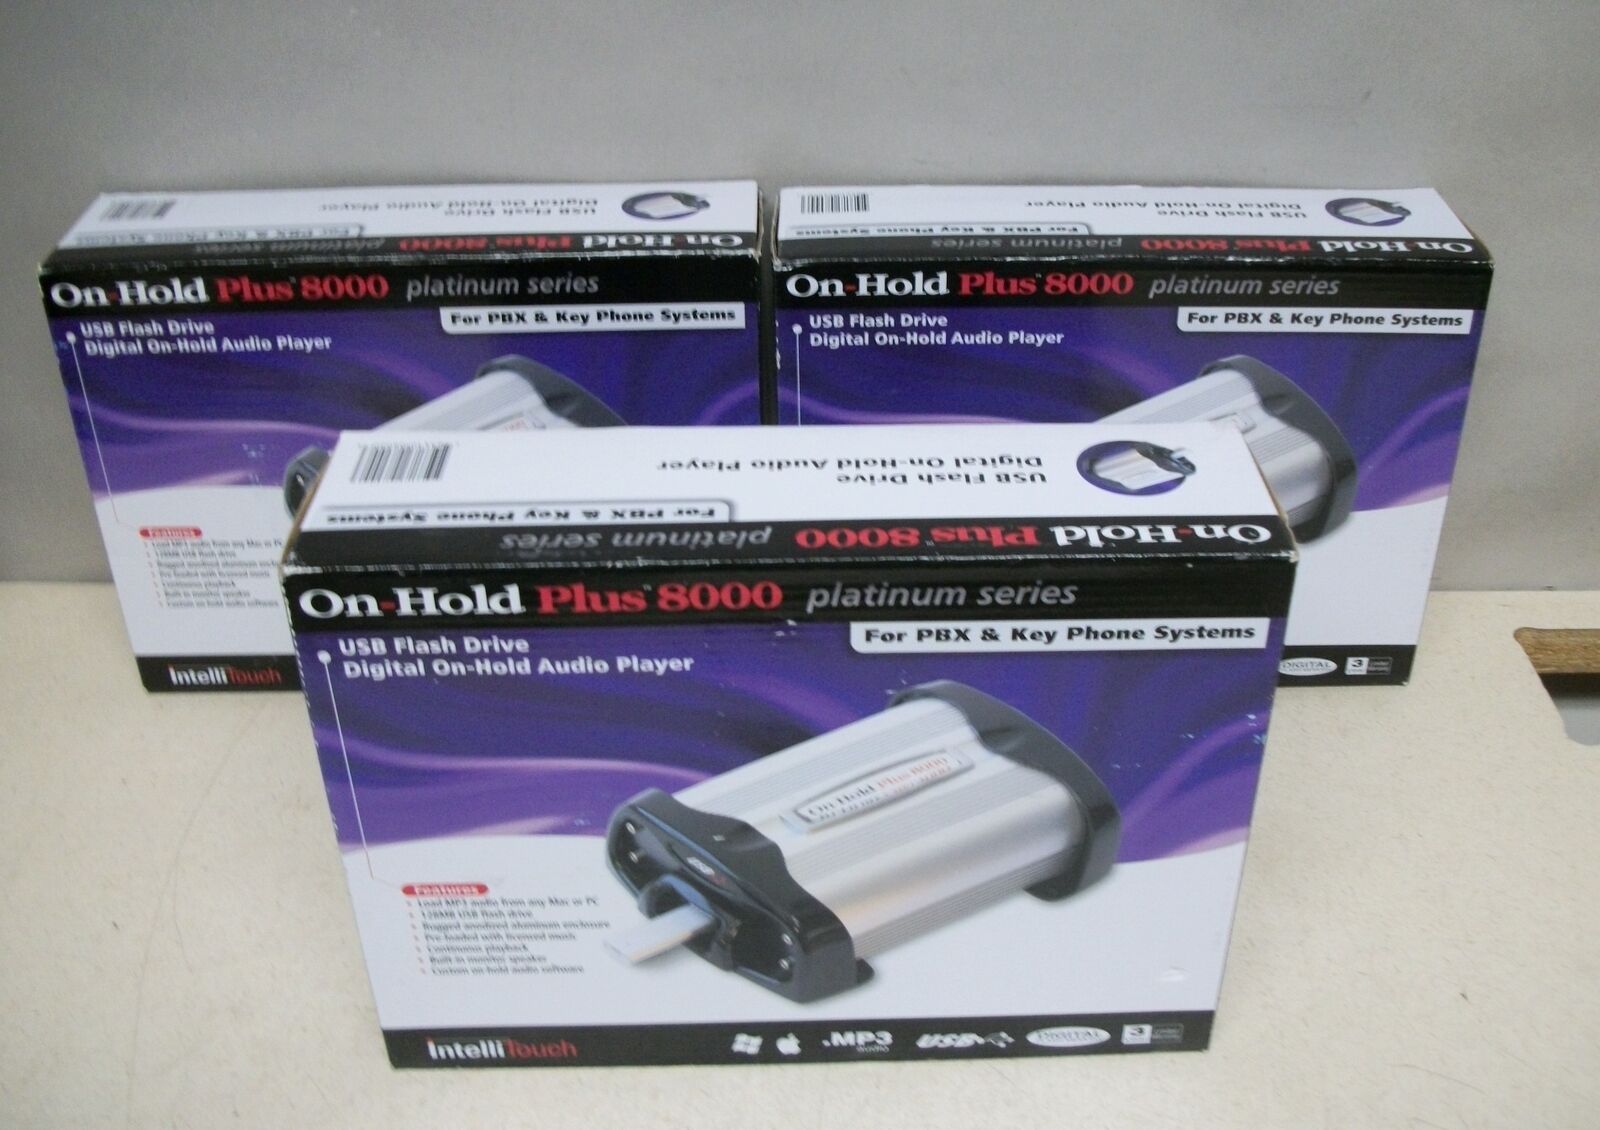 Lot of 3 - INTELLITOUCH On-Hold Plus 8000 Platnium USB Flash Drive Audio Players